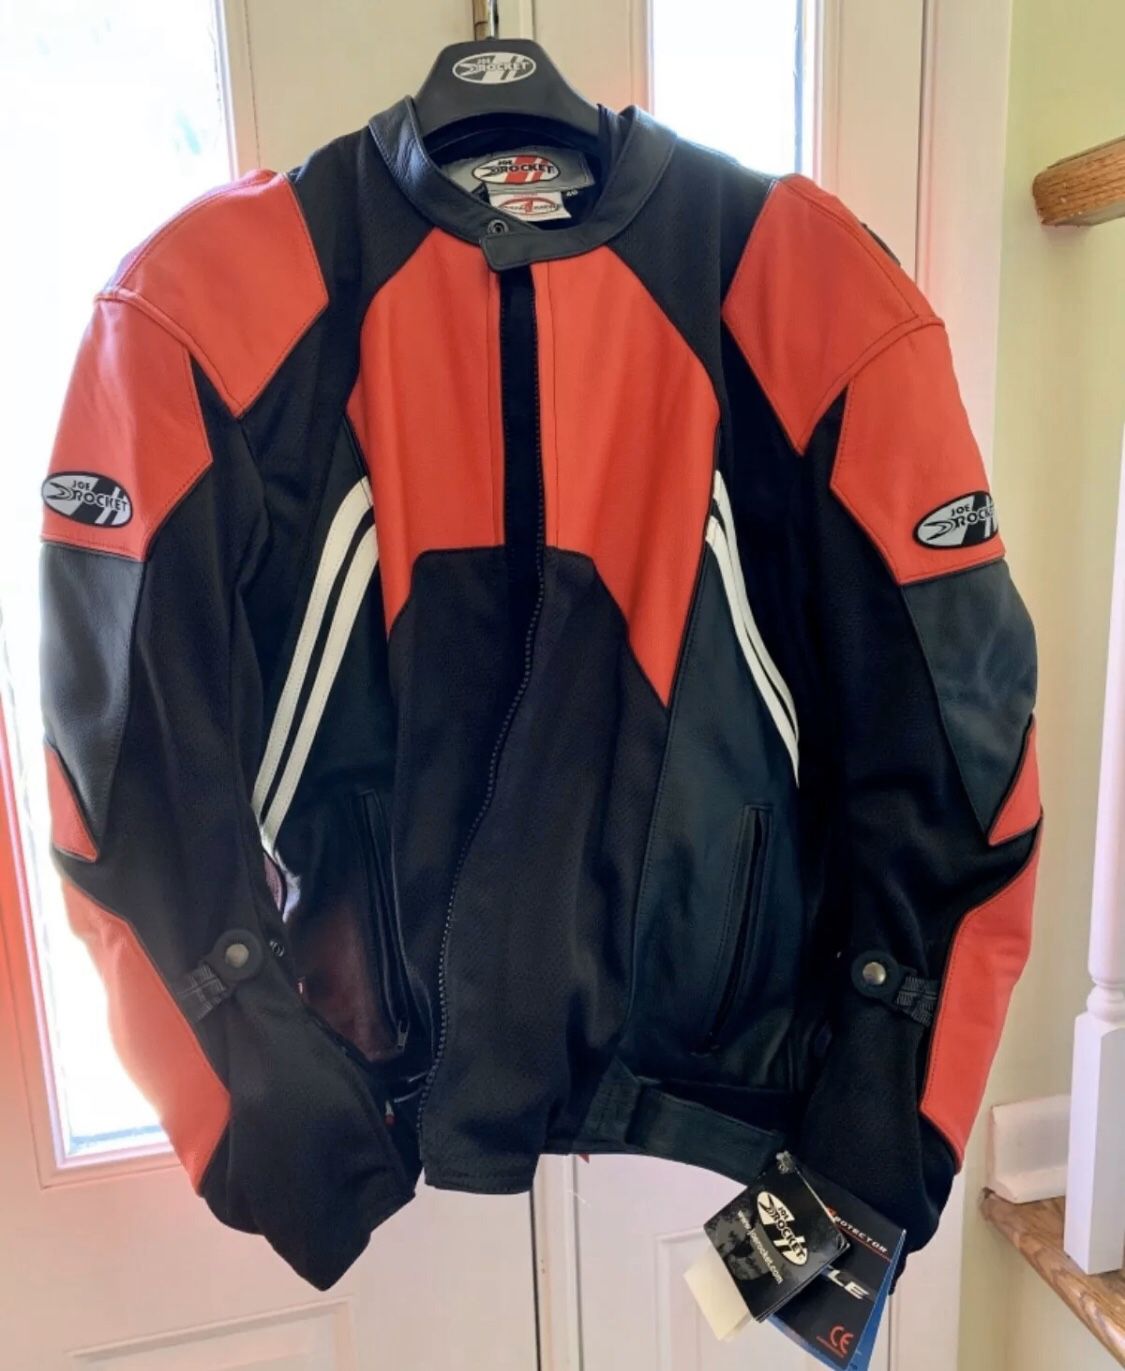 Joe Rocket Red & Black Leather Textile Motorcycle Jacket Mens Sz Large (46)